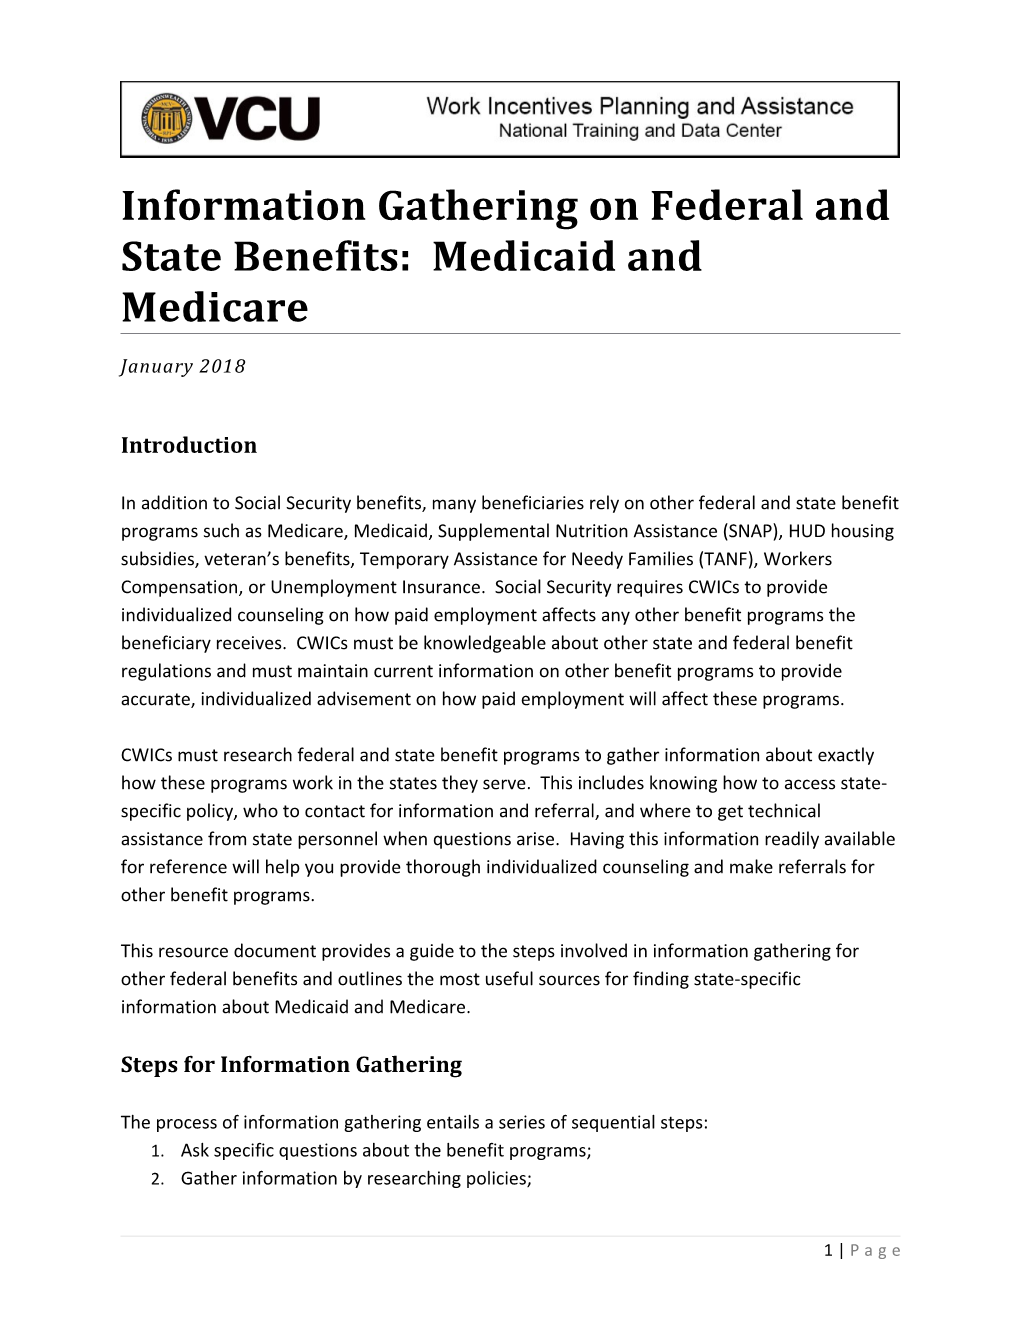 Information Gathering Tools - Medicaid & Medicare